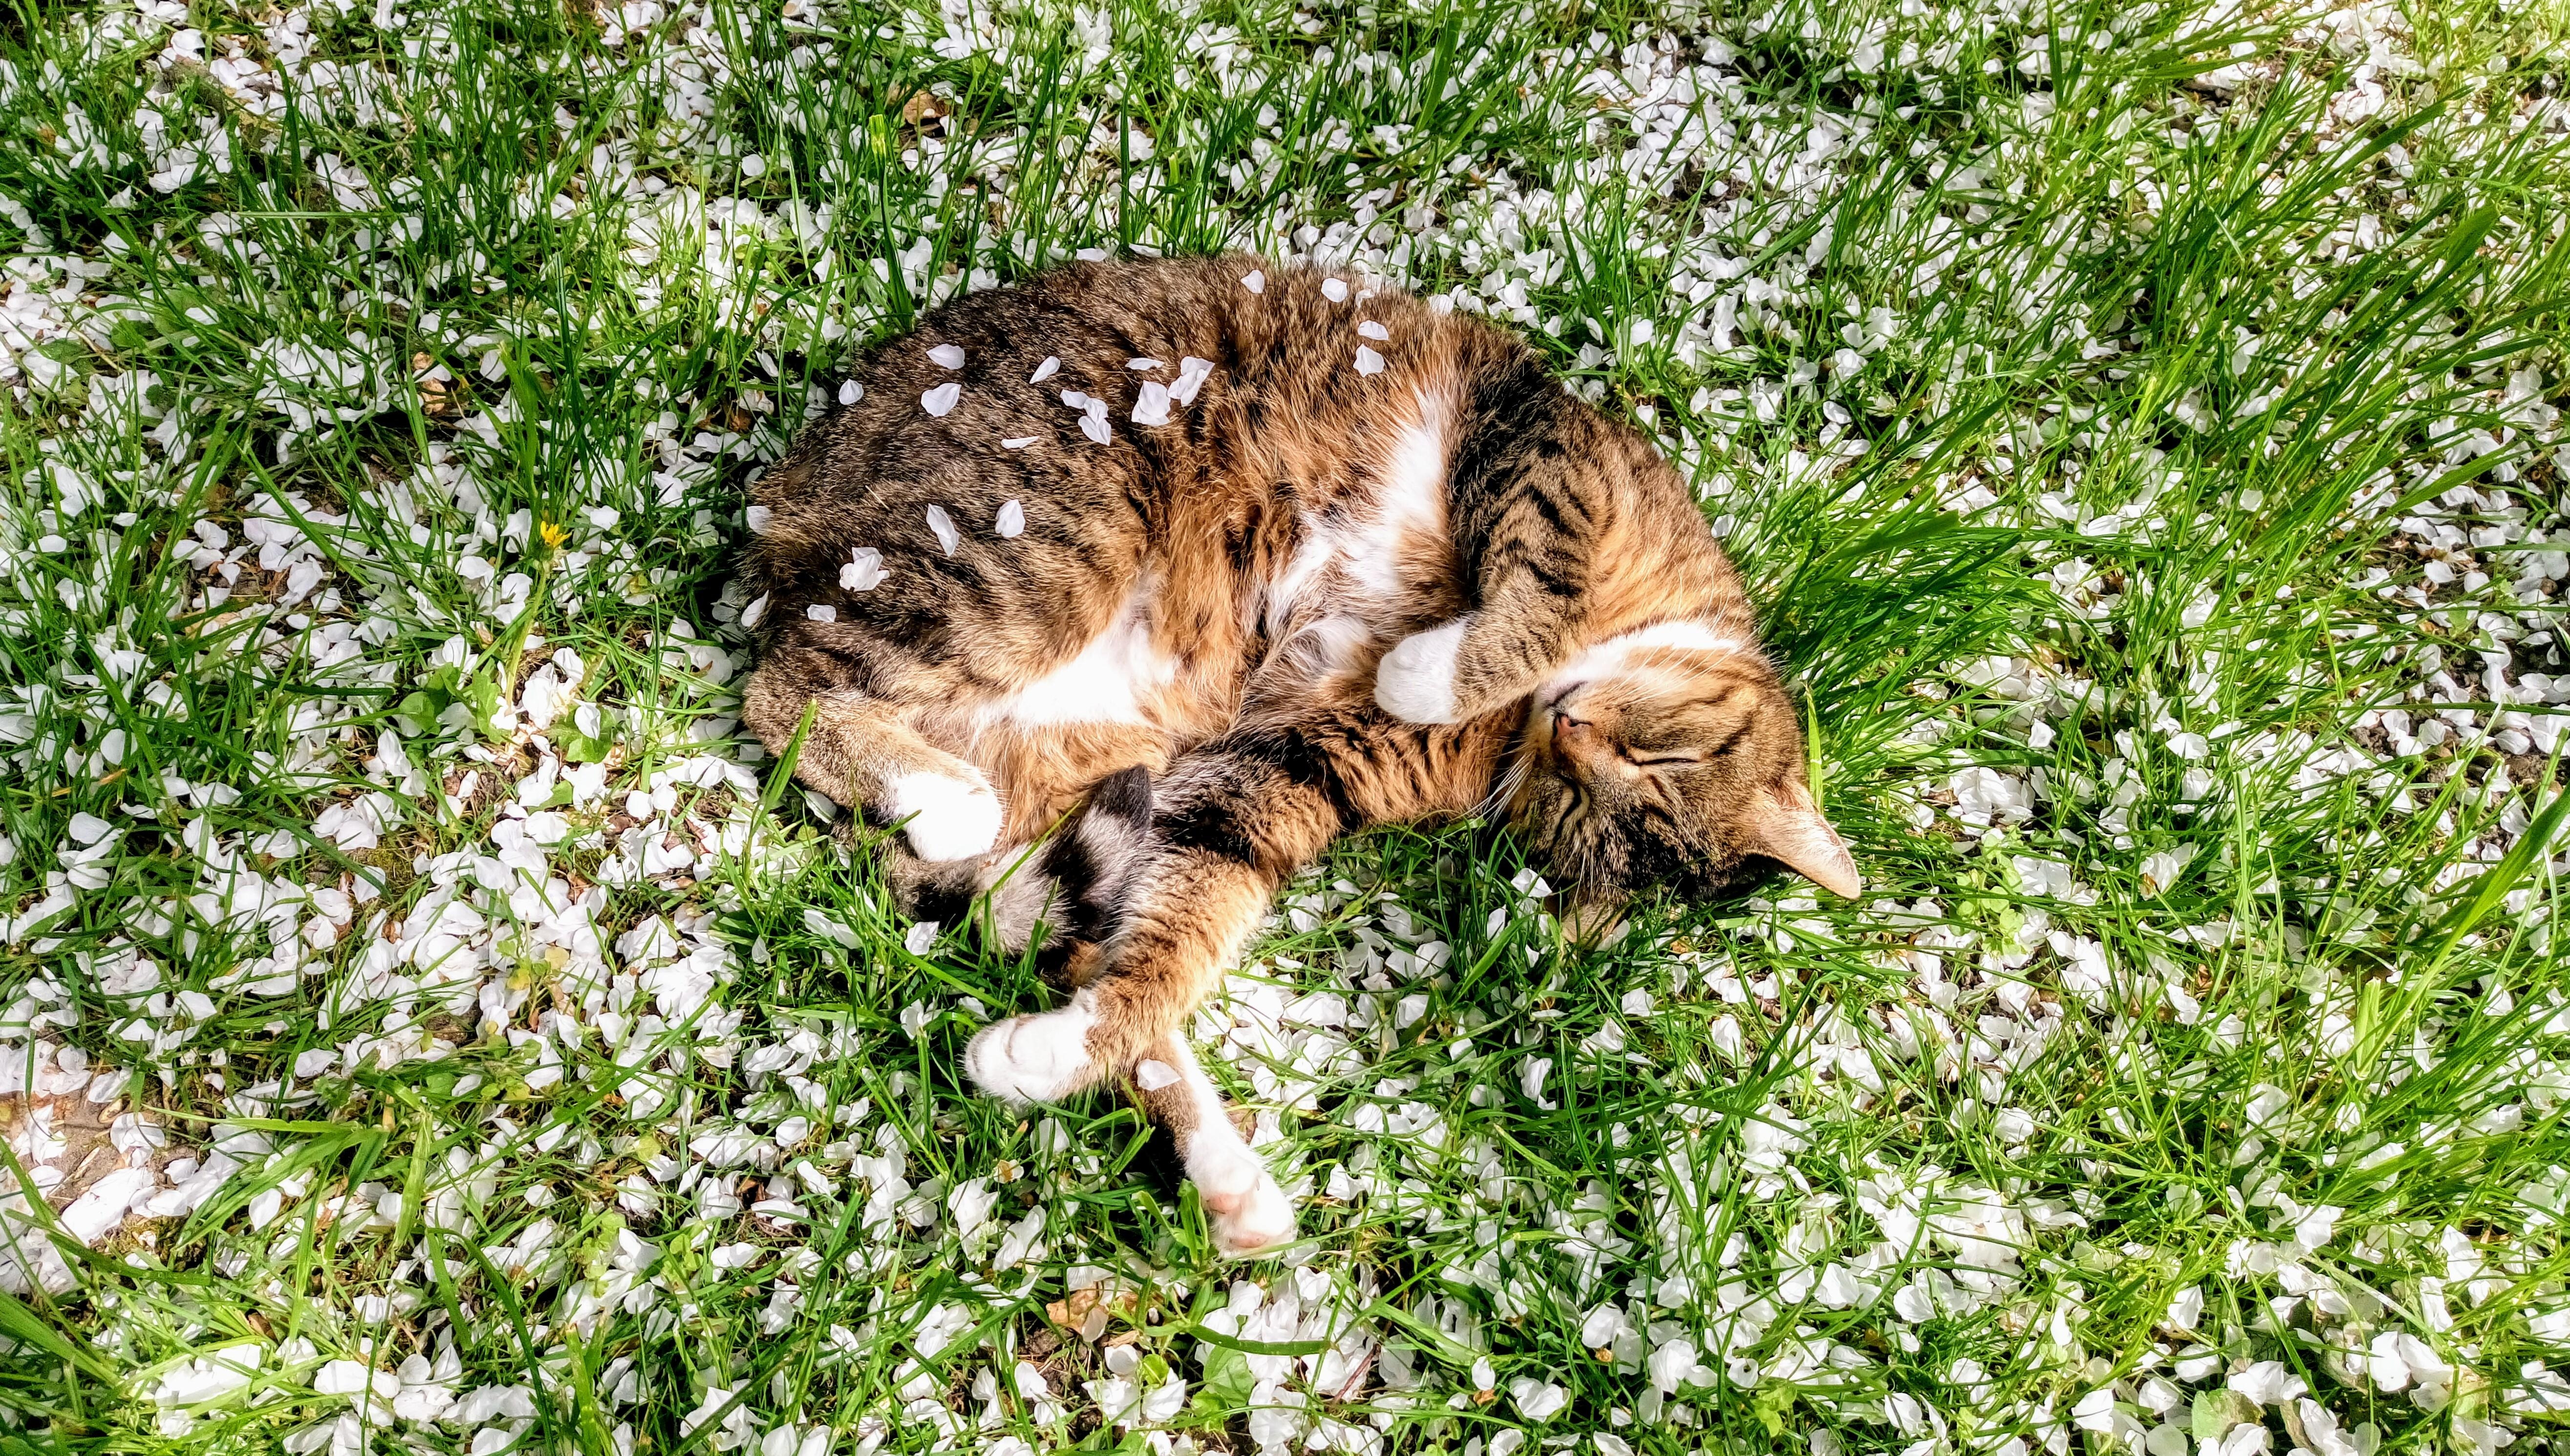 Spring #Kirschblüte #cat #garden #flowers #green #white #natur #germany 